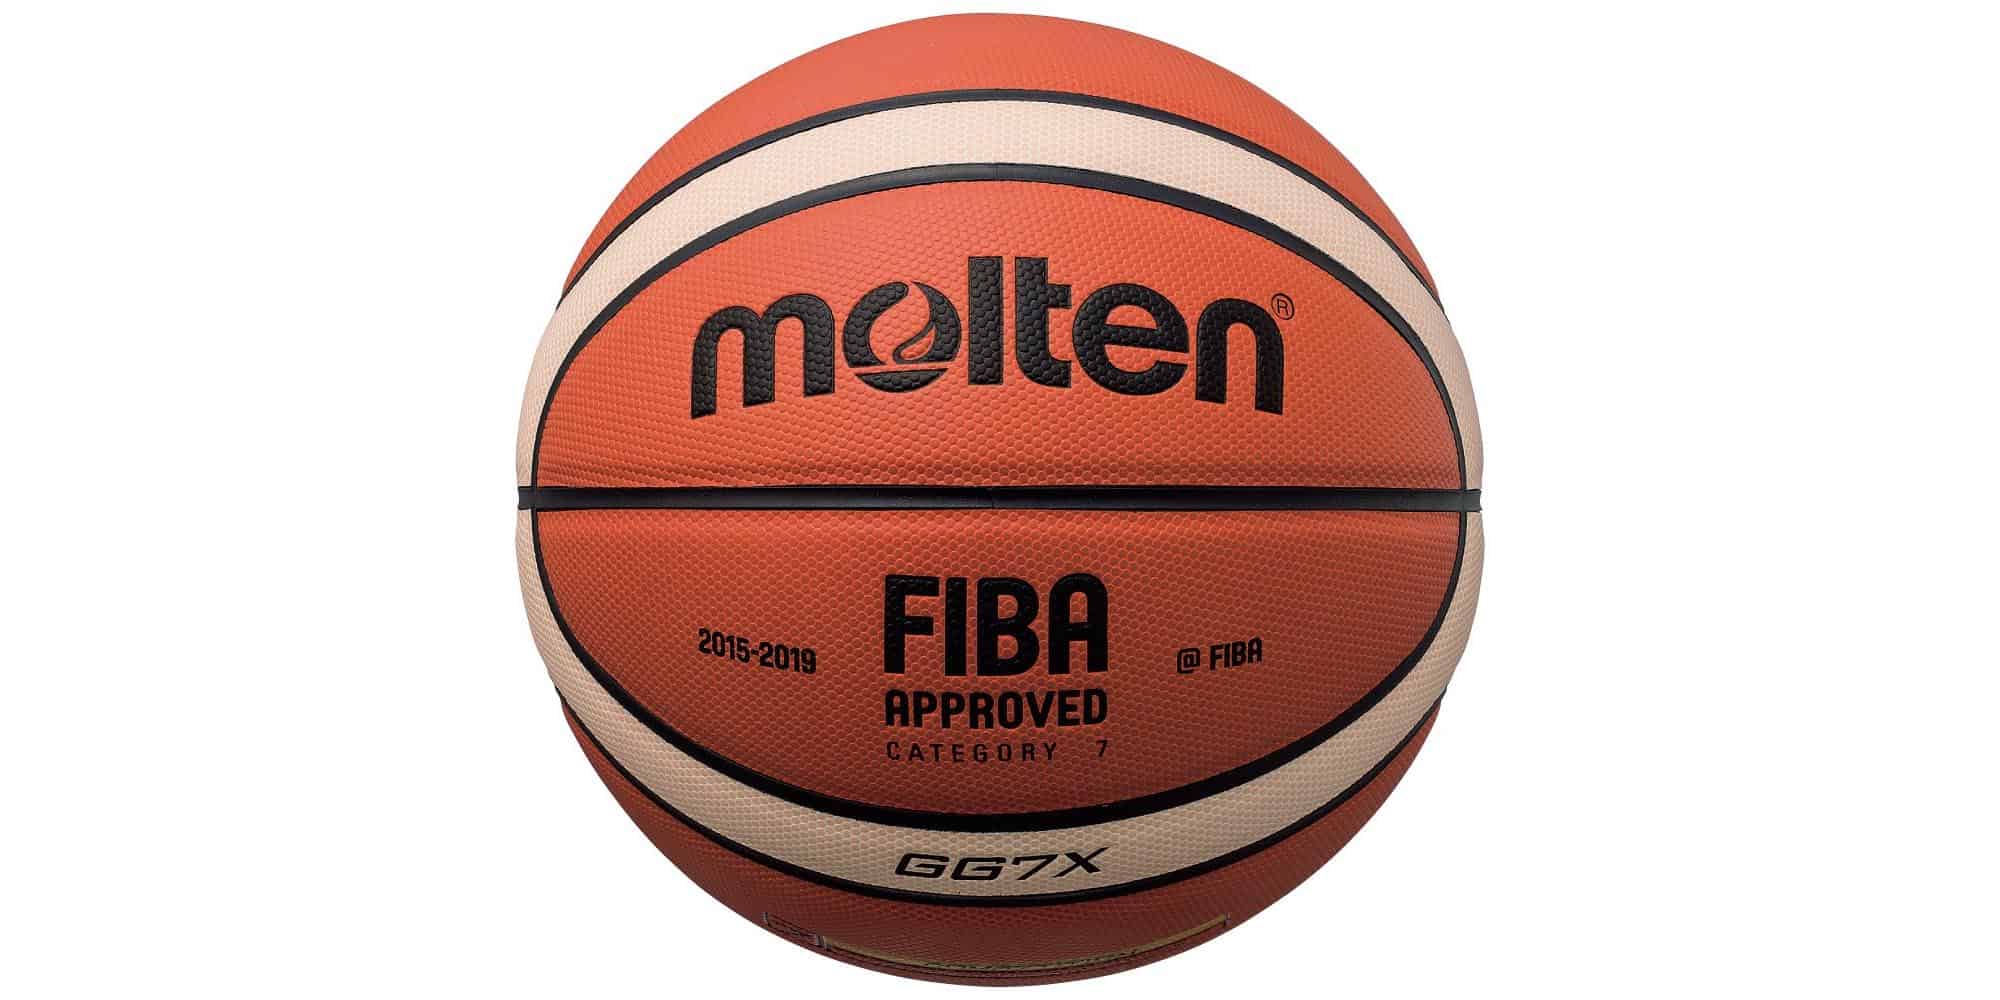 7  Basketball UK Molten GG7X basketball game ball for indoor and outdoor No 